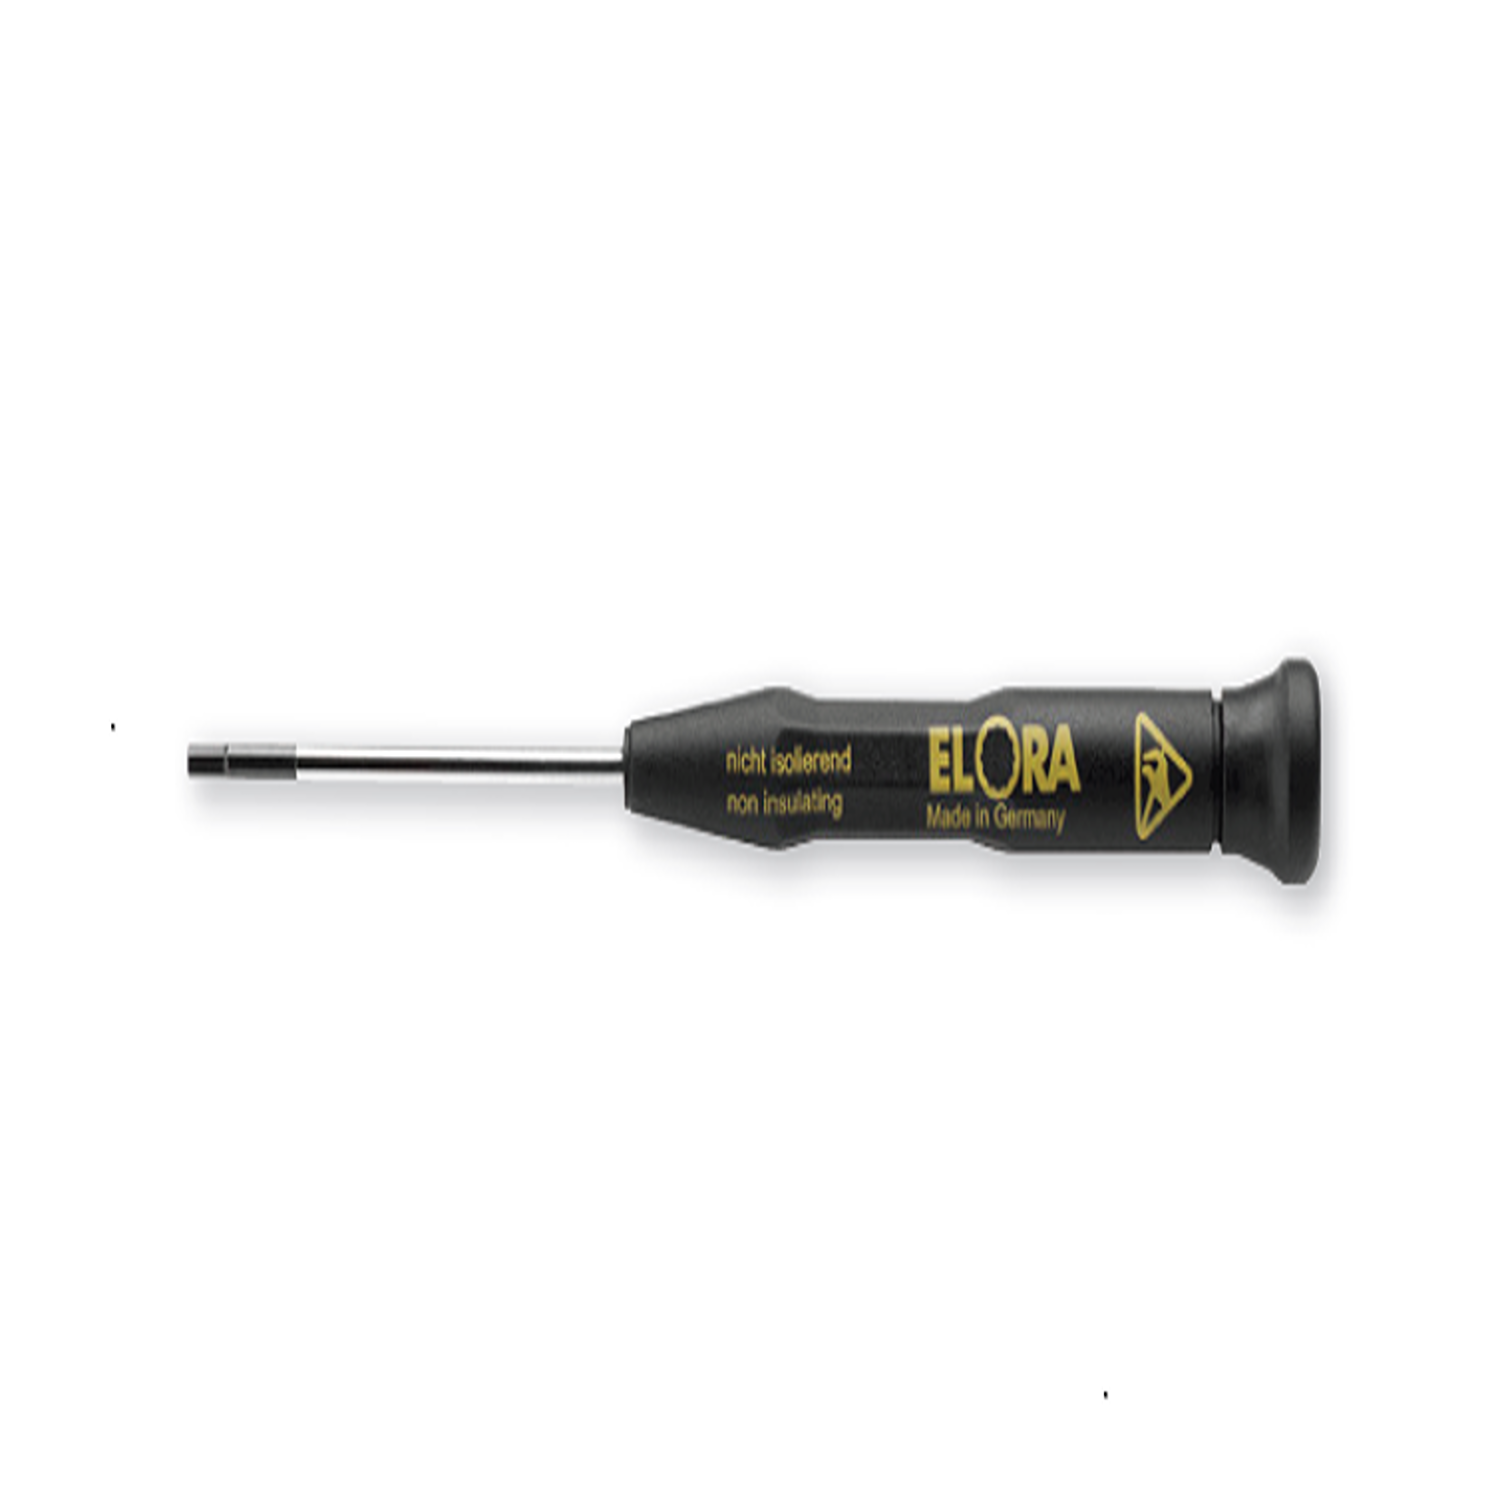 ELORA 625-KU ESD Electronic Ball End Screwdriver (ELORA Tools) - Premium Screwdriver from ELORA - Shop now at Yew Aik.